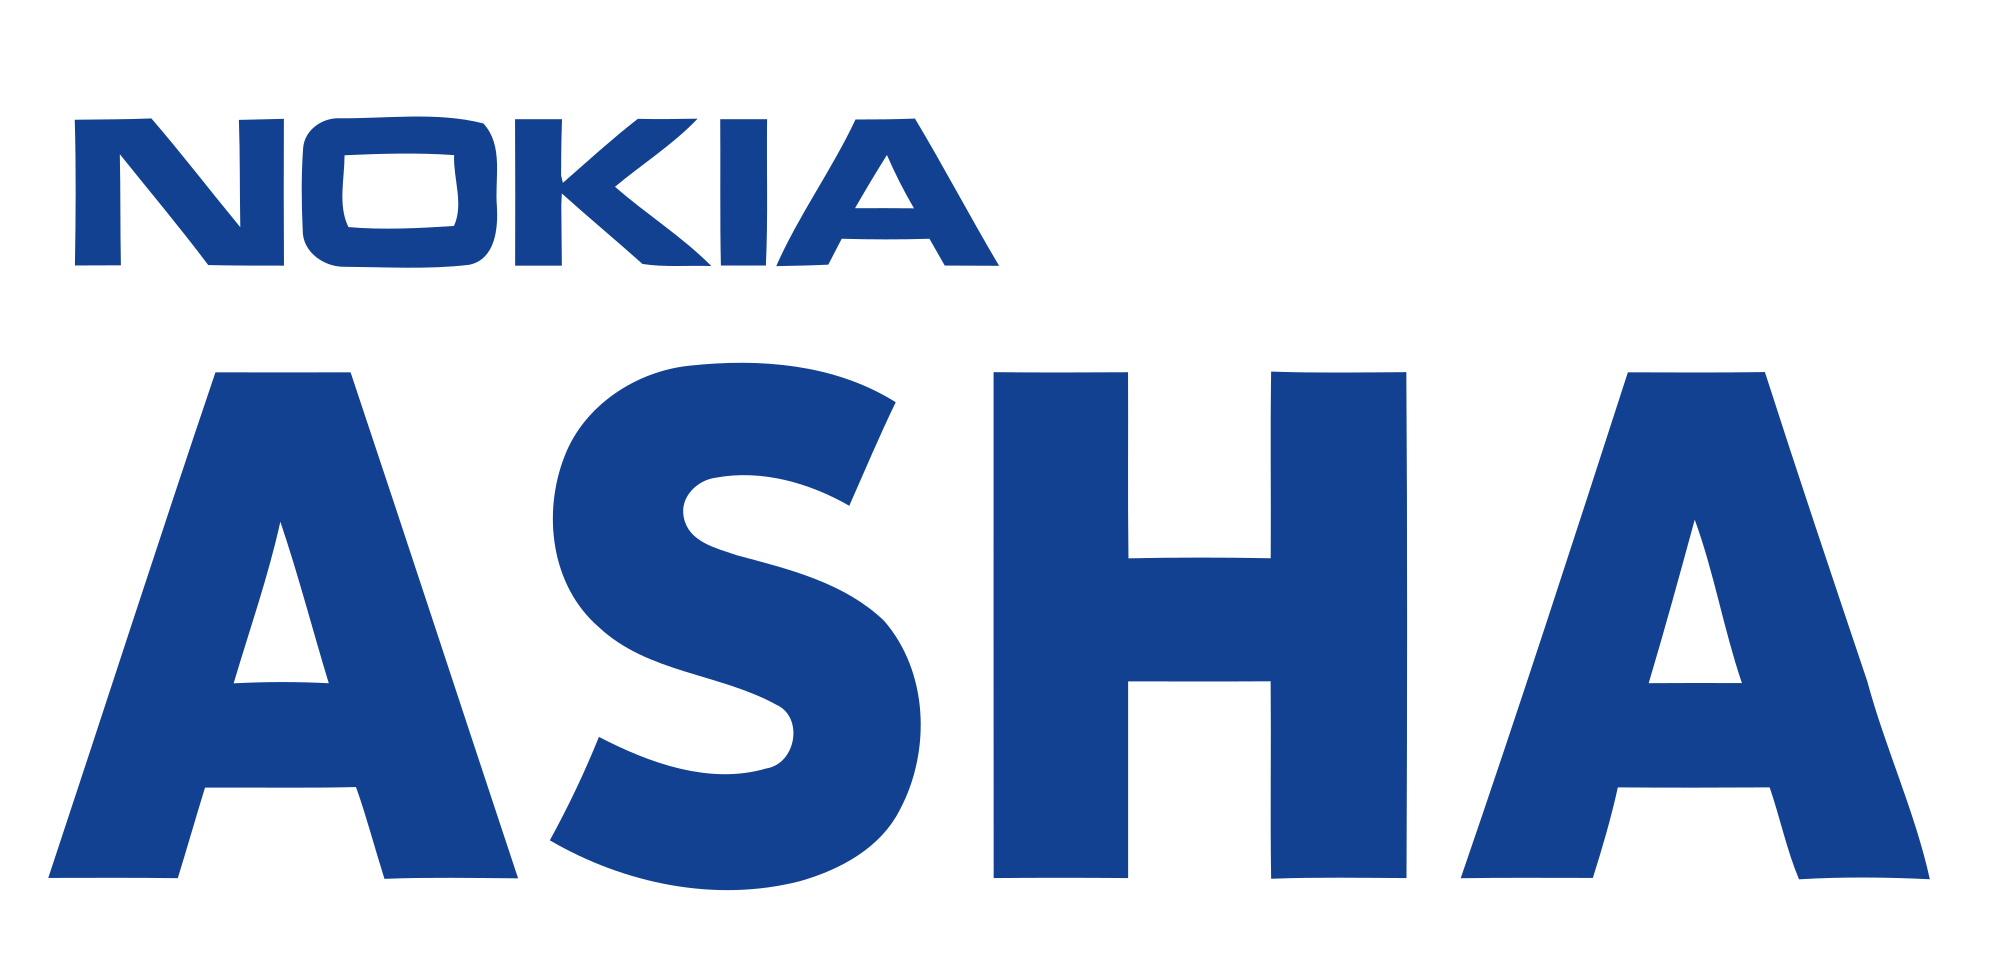 Asha Logo - File:Nokia Asha logo.svg - Wikimedia Commons